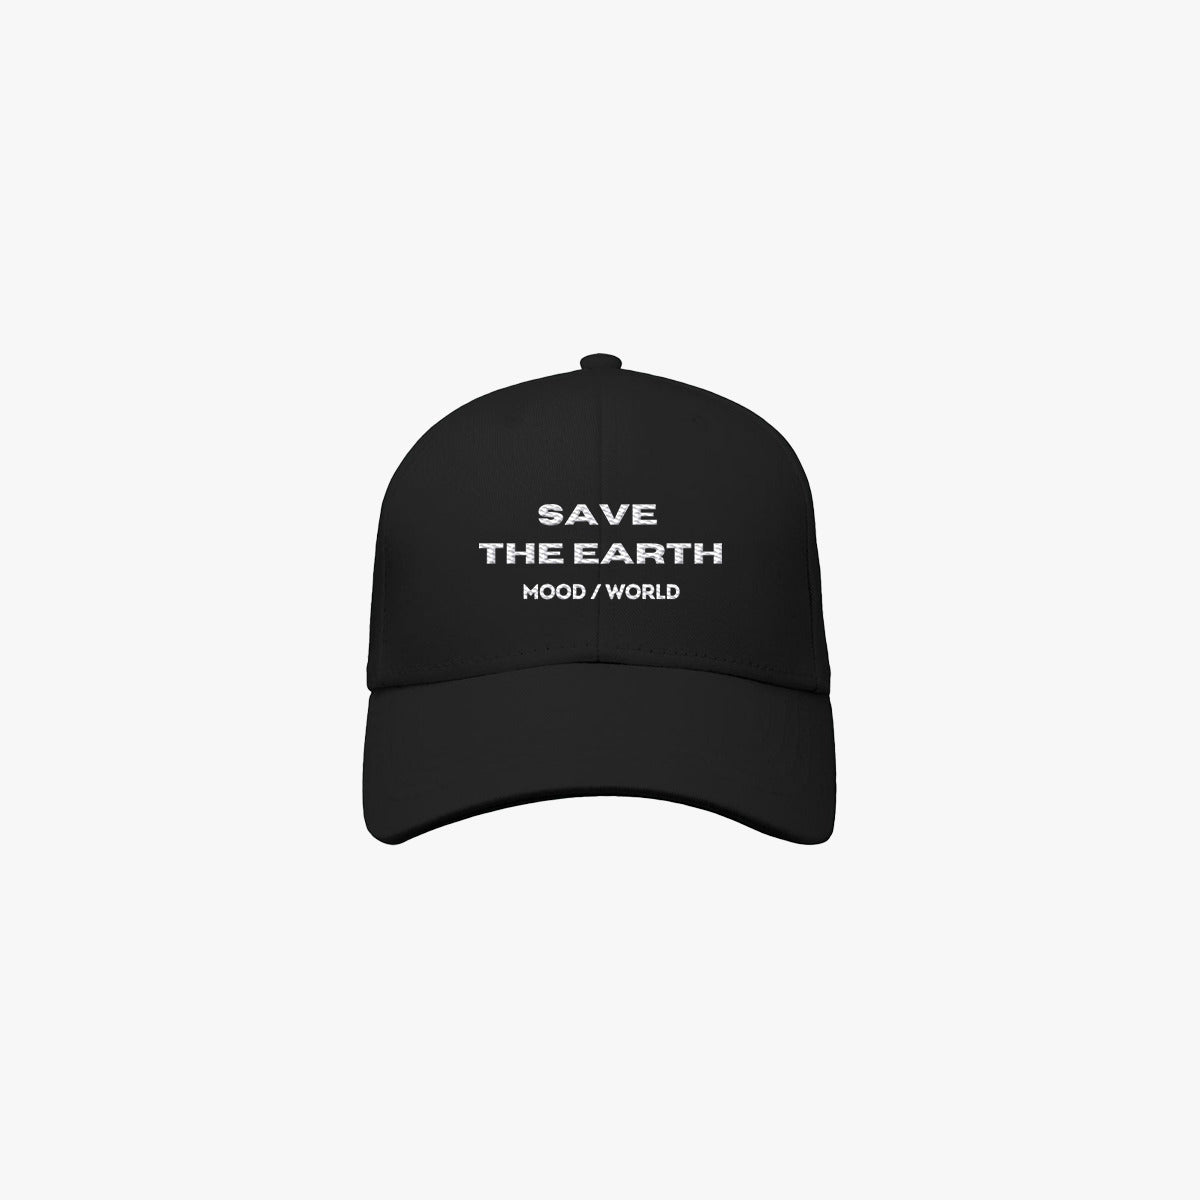 'SAVE THE EARTH' Organic Baseball-Cap aus 100% nachhaltiger Bio-Baumwolle in der Farbe Black